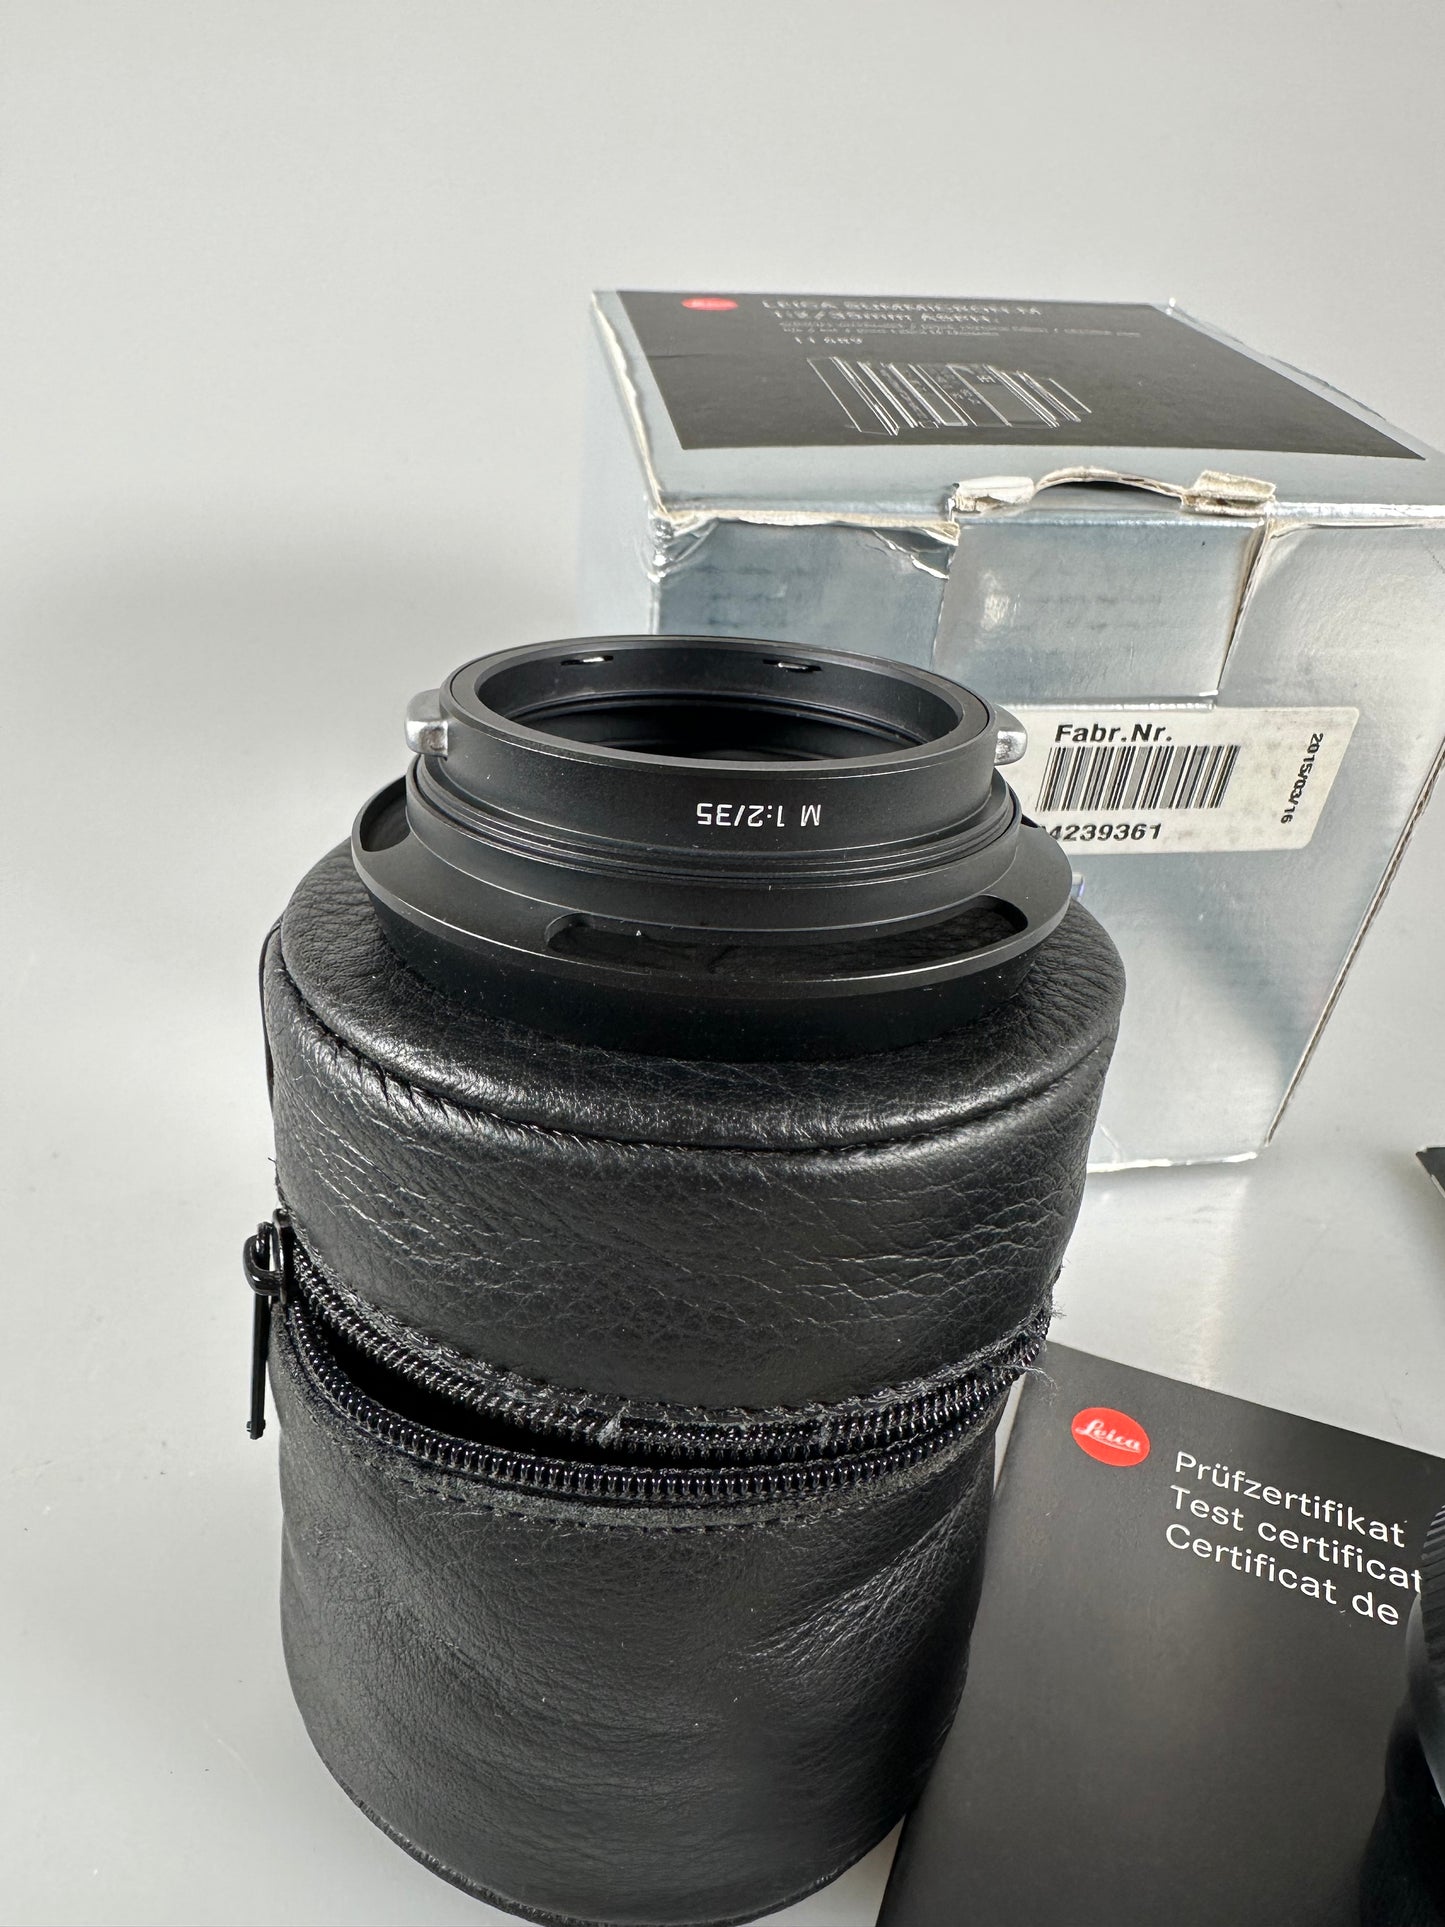 Leica Summicron M ASPH 35mm F2 Limited edition Black chrome brass lens RARE